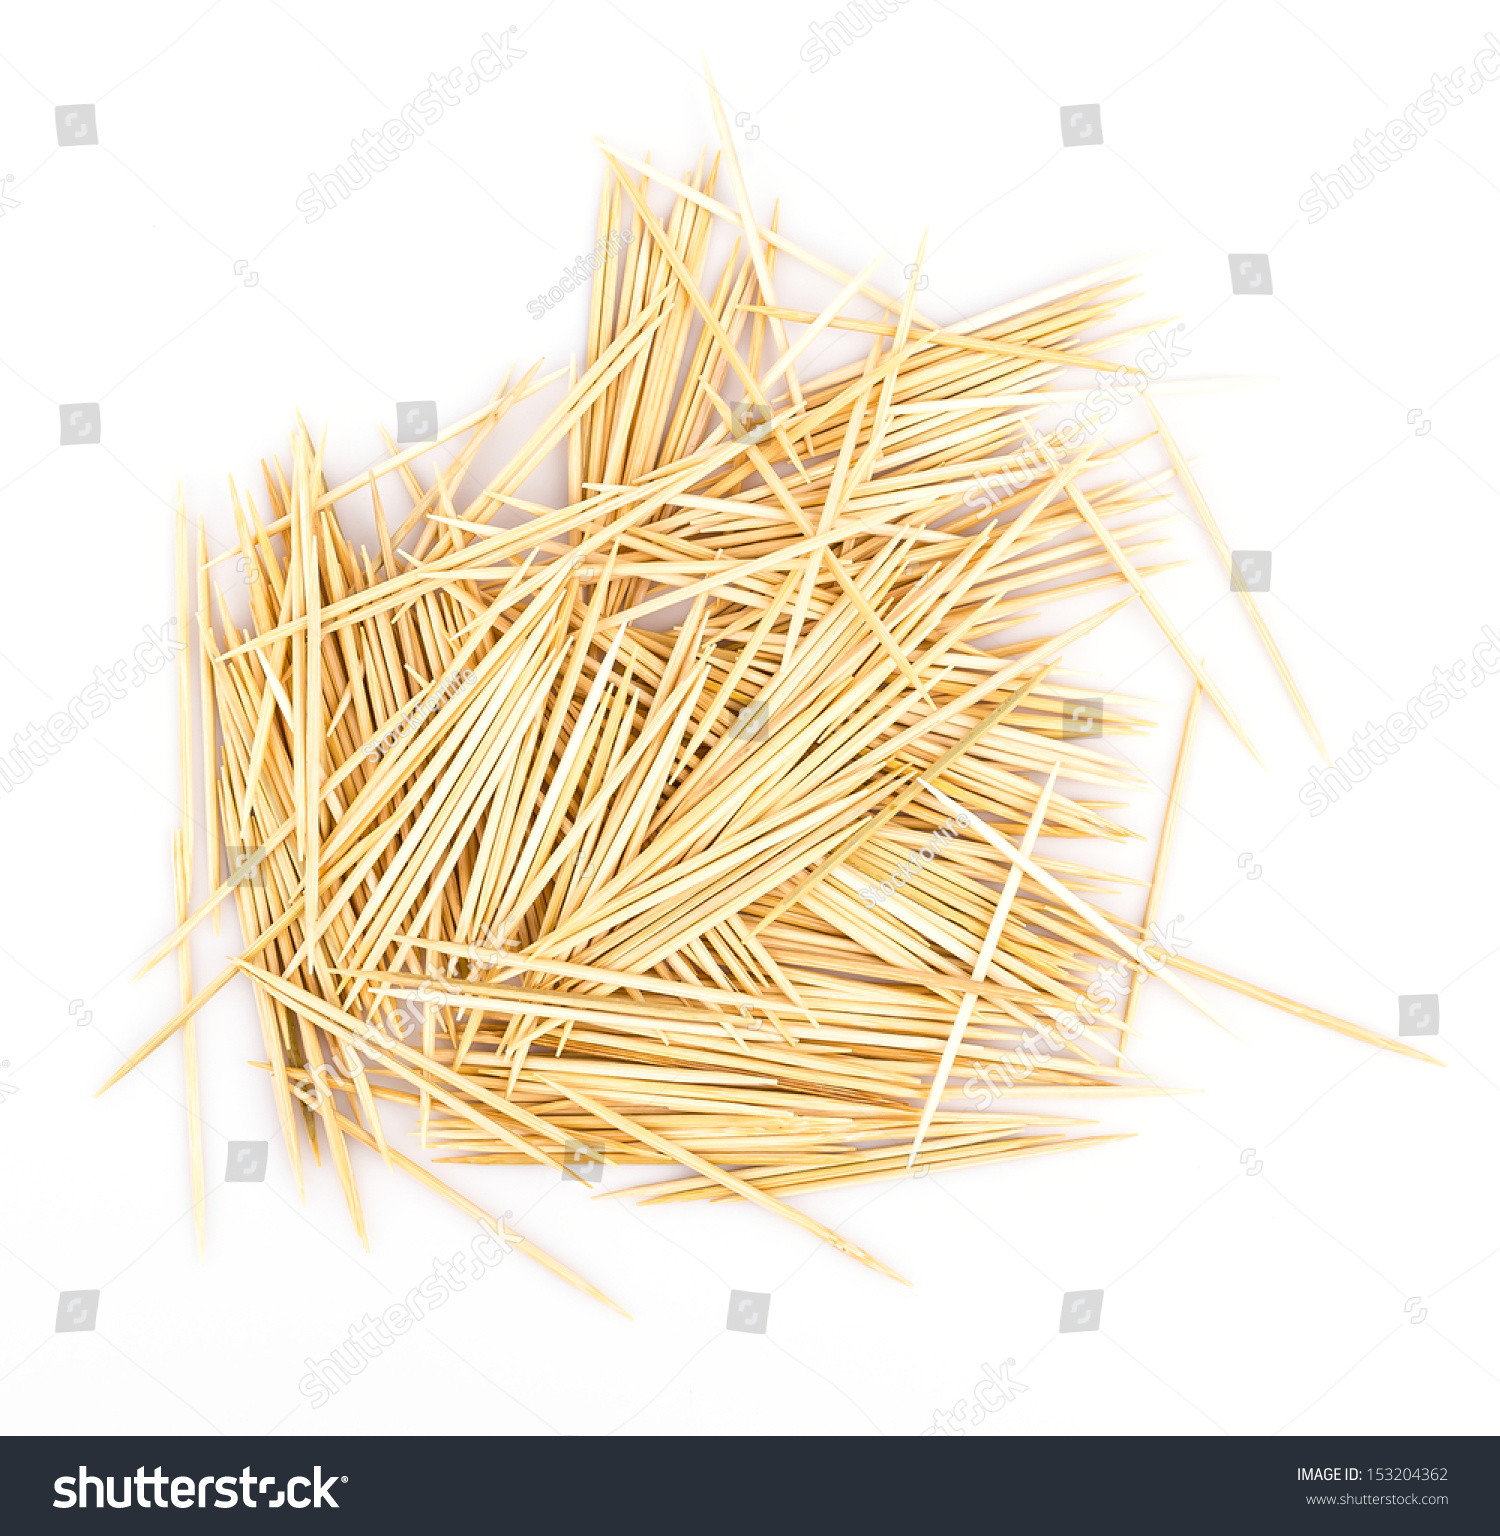 Toothpicks On White Background Stock Photo 153204362 : Shutterstock